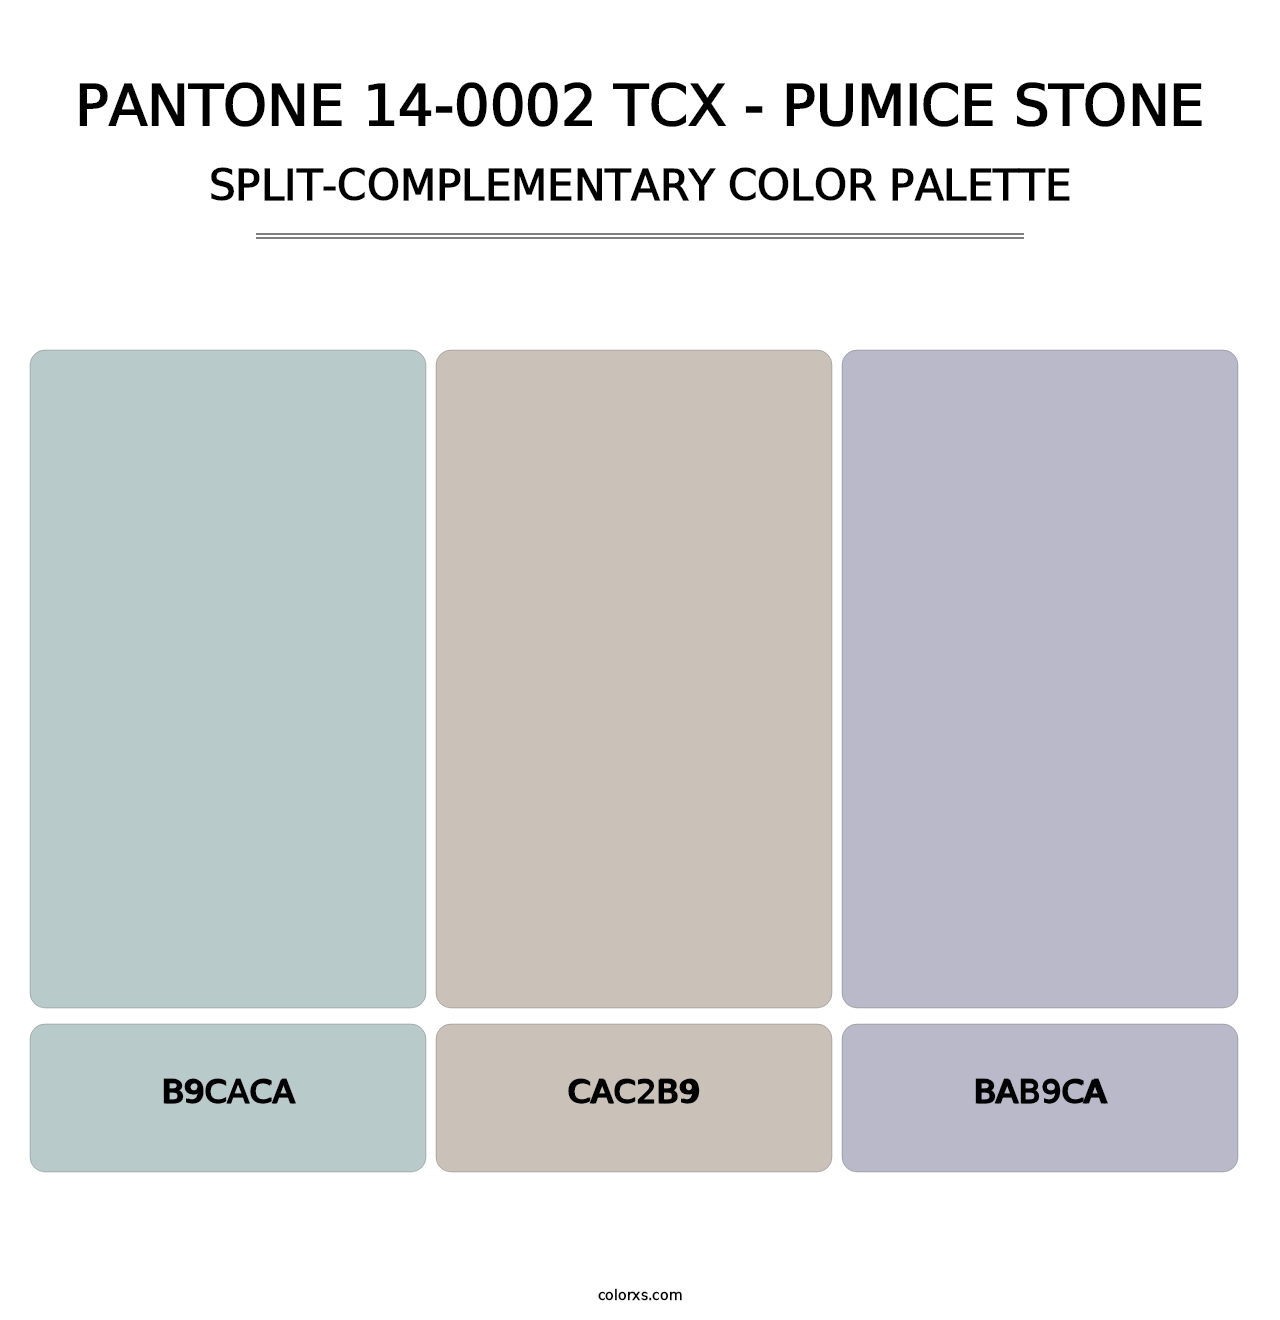 PANTONE 14-0002 TCX - Pumice Stone - Split-Complementary Color Palette